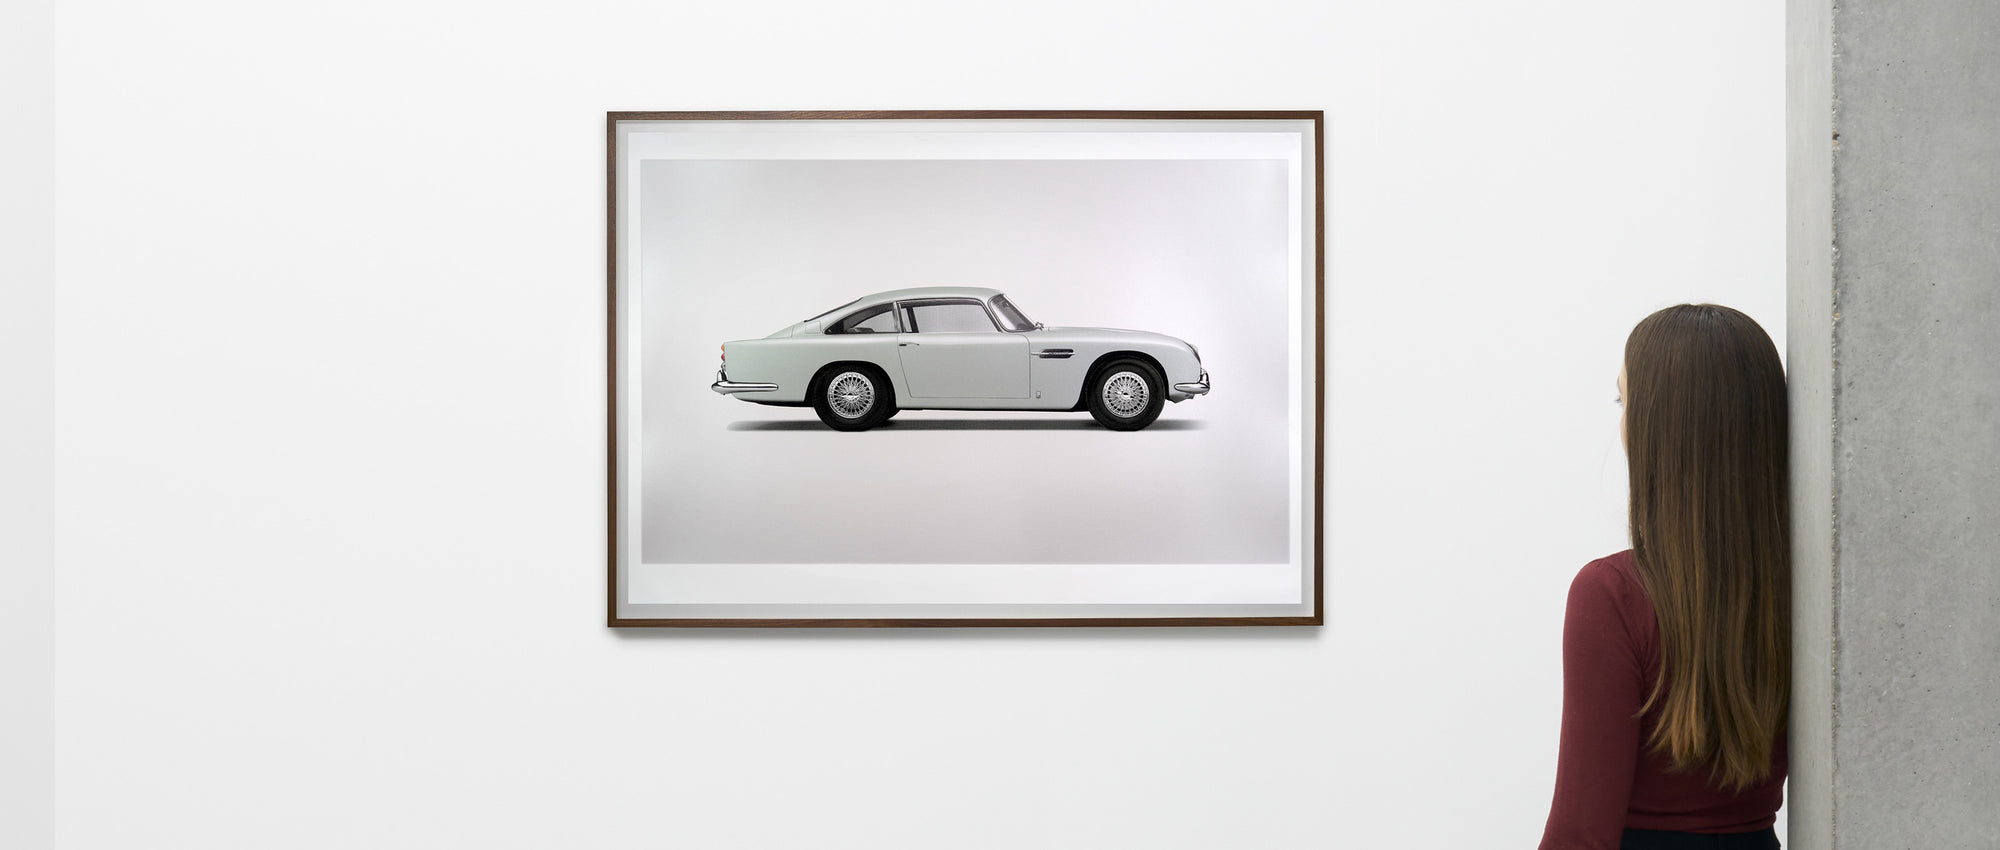 Aston Martin DB5 Vantage - Alan Thornton - Art Screen Print - Side View